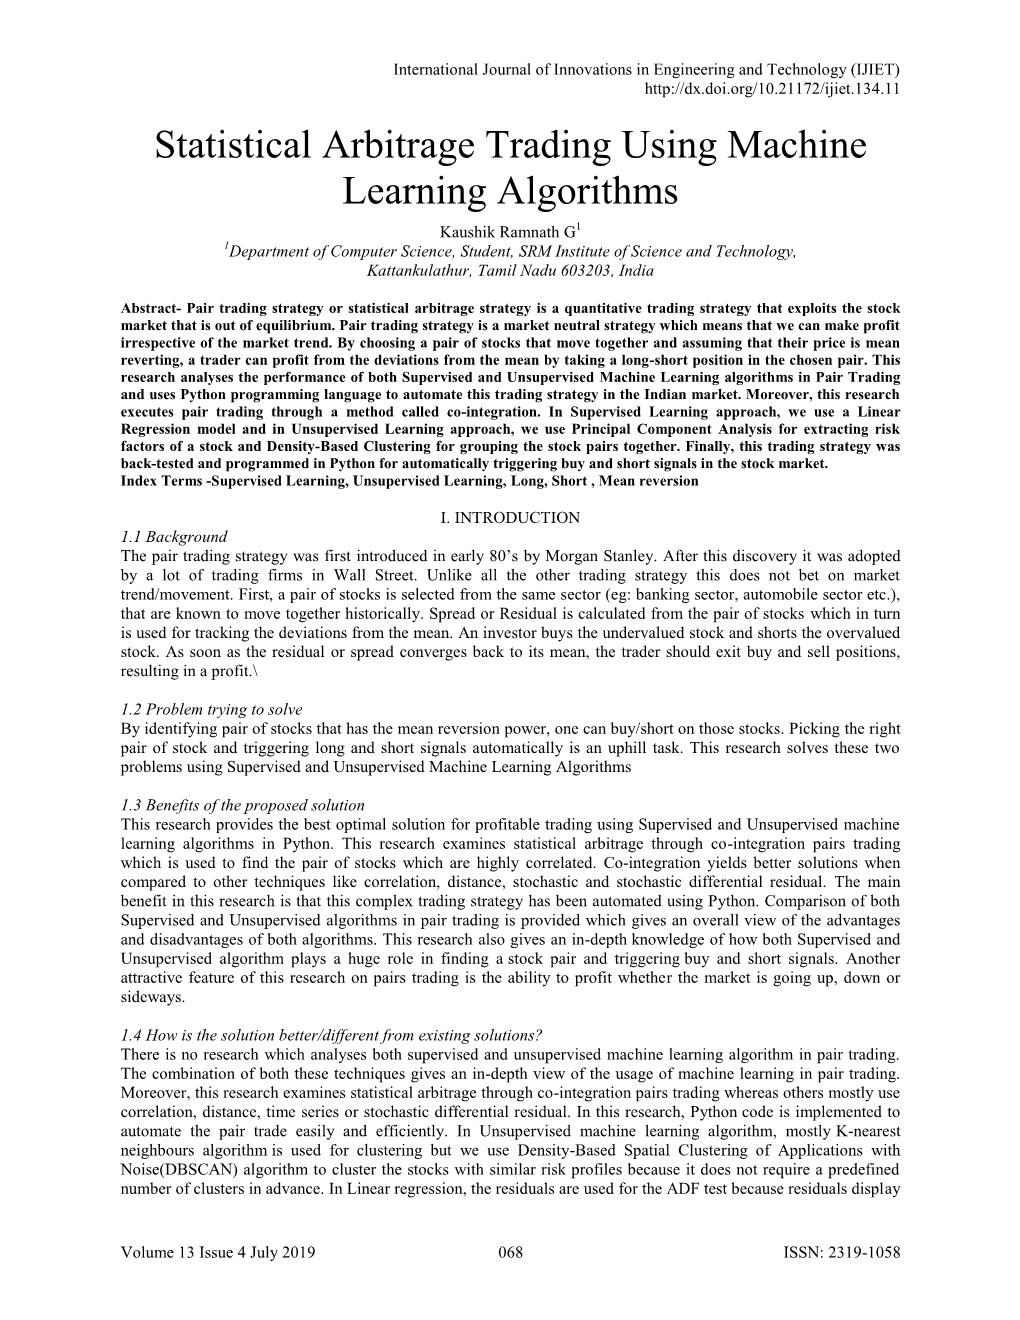 Statistical Arbitrage Trading Using Machine Learning Algorithms